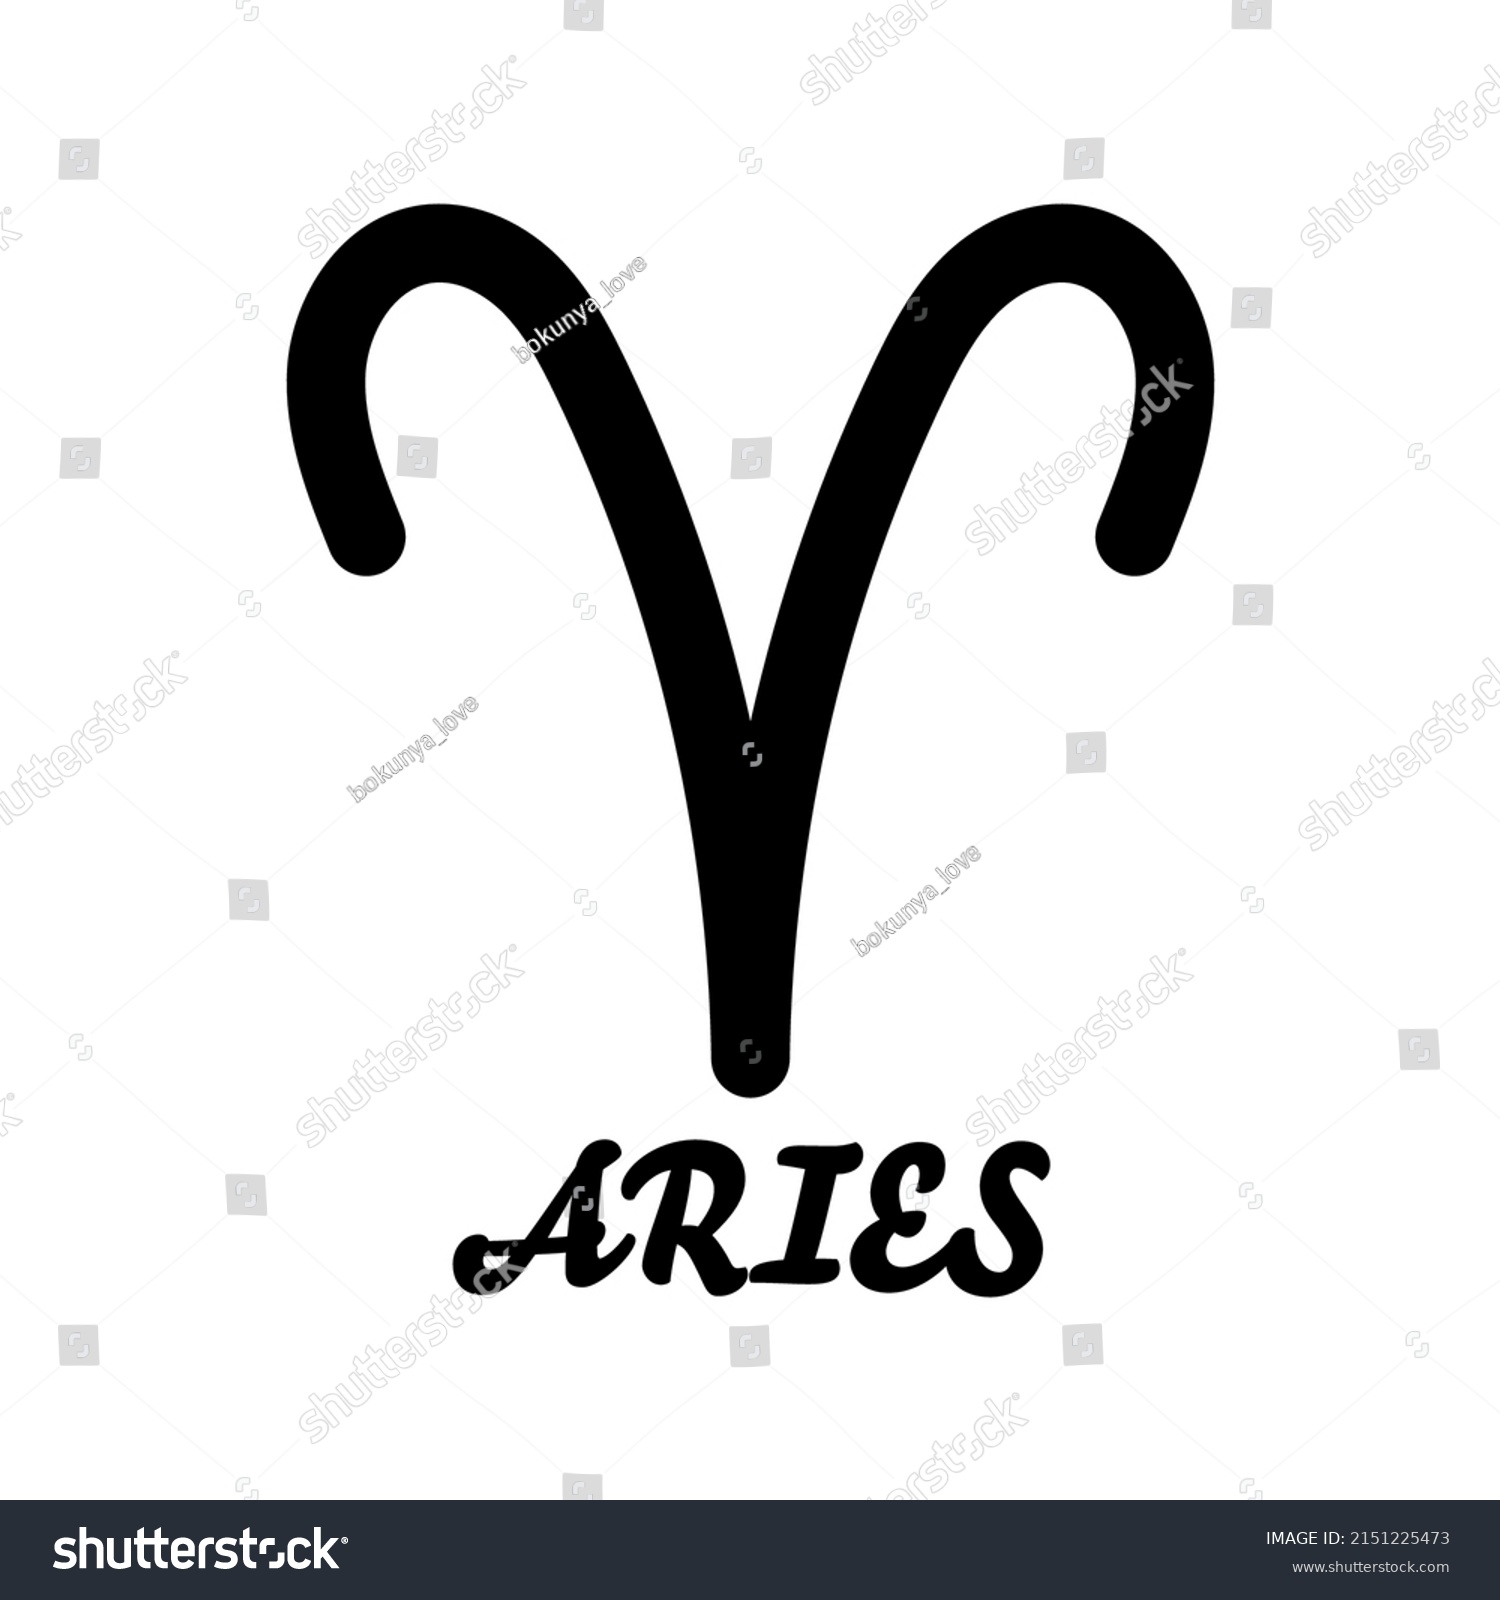 4,276 Aries tattoo vector Images, Stock Photos & Vectors | Shutterstock